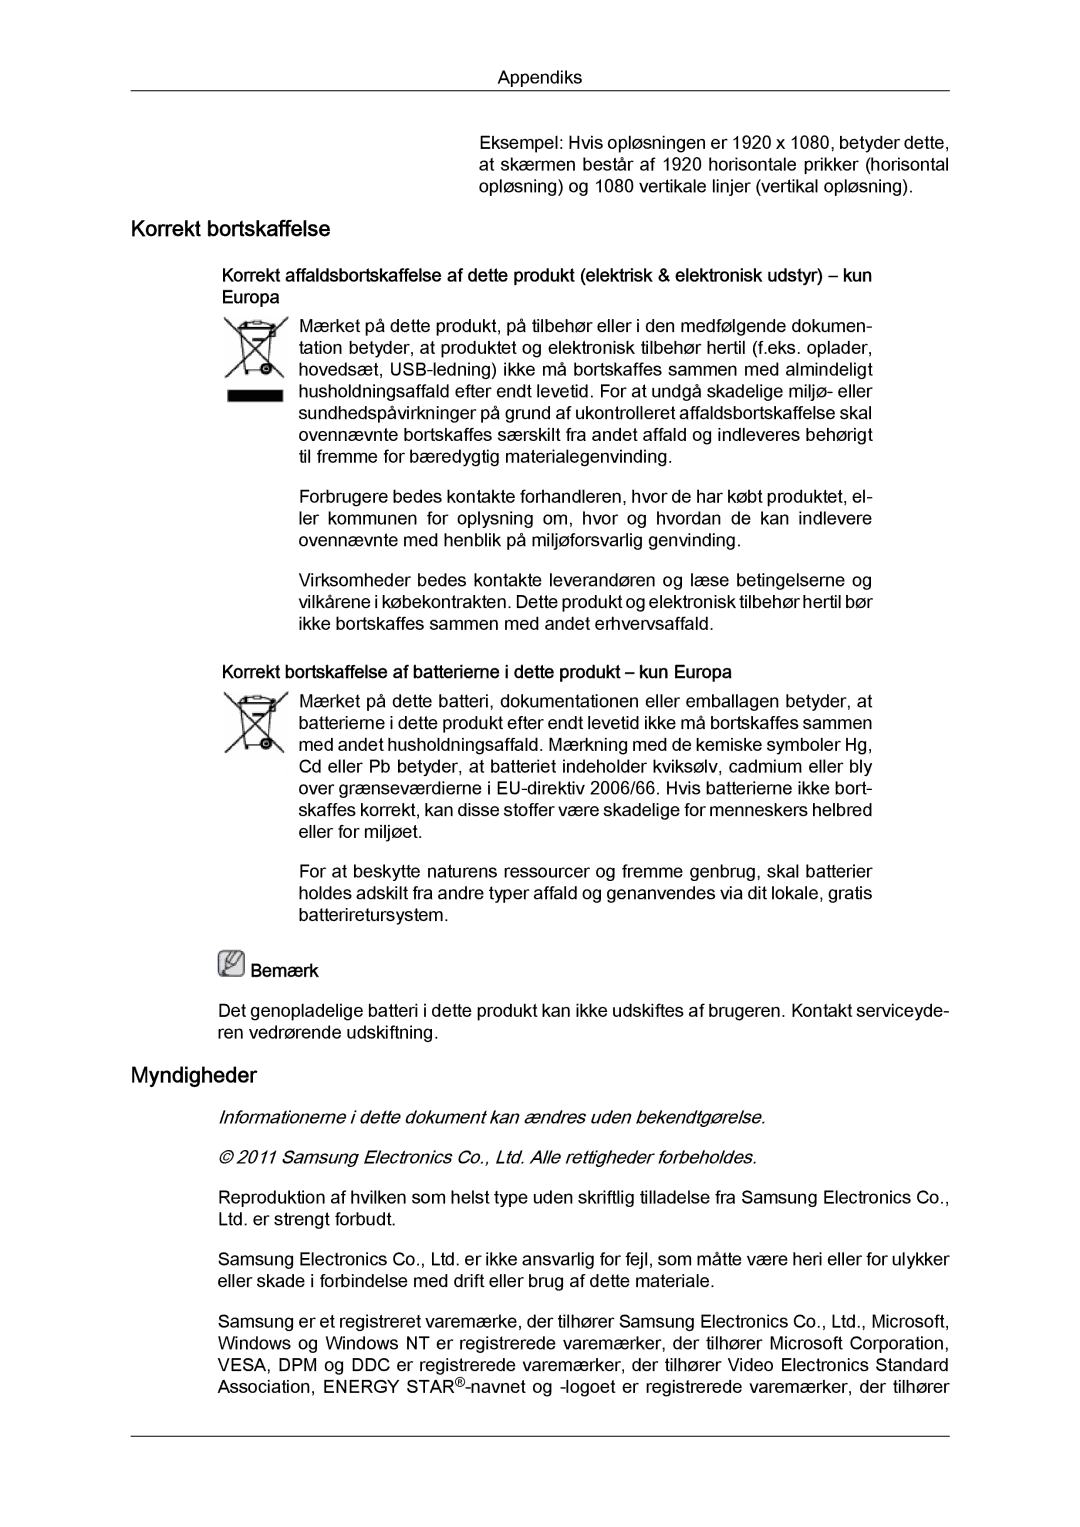 Samsung LH65MGQLBF/EN manual Korrekt bortskaffelse, Myndigheder 